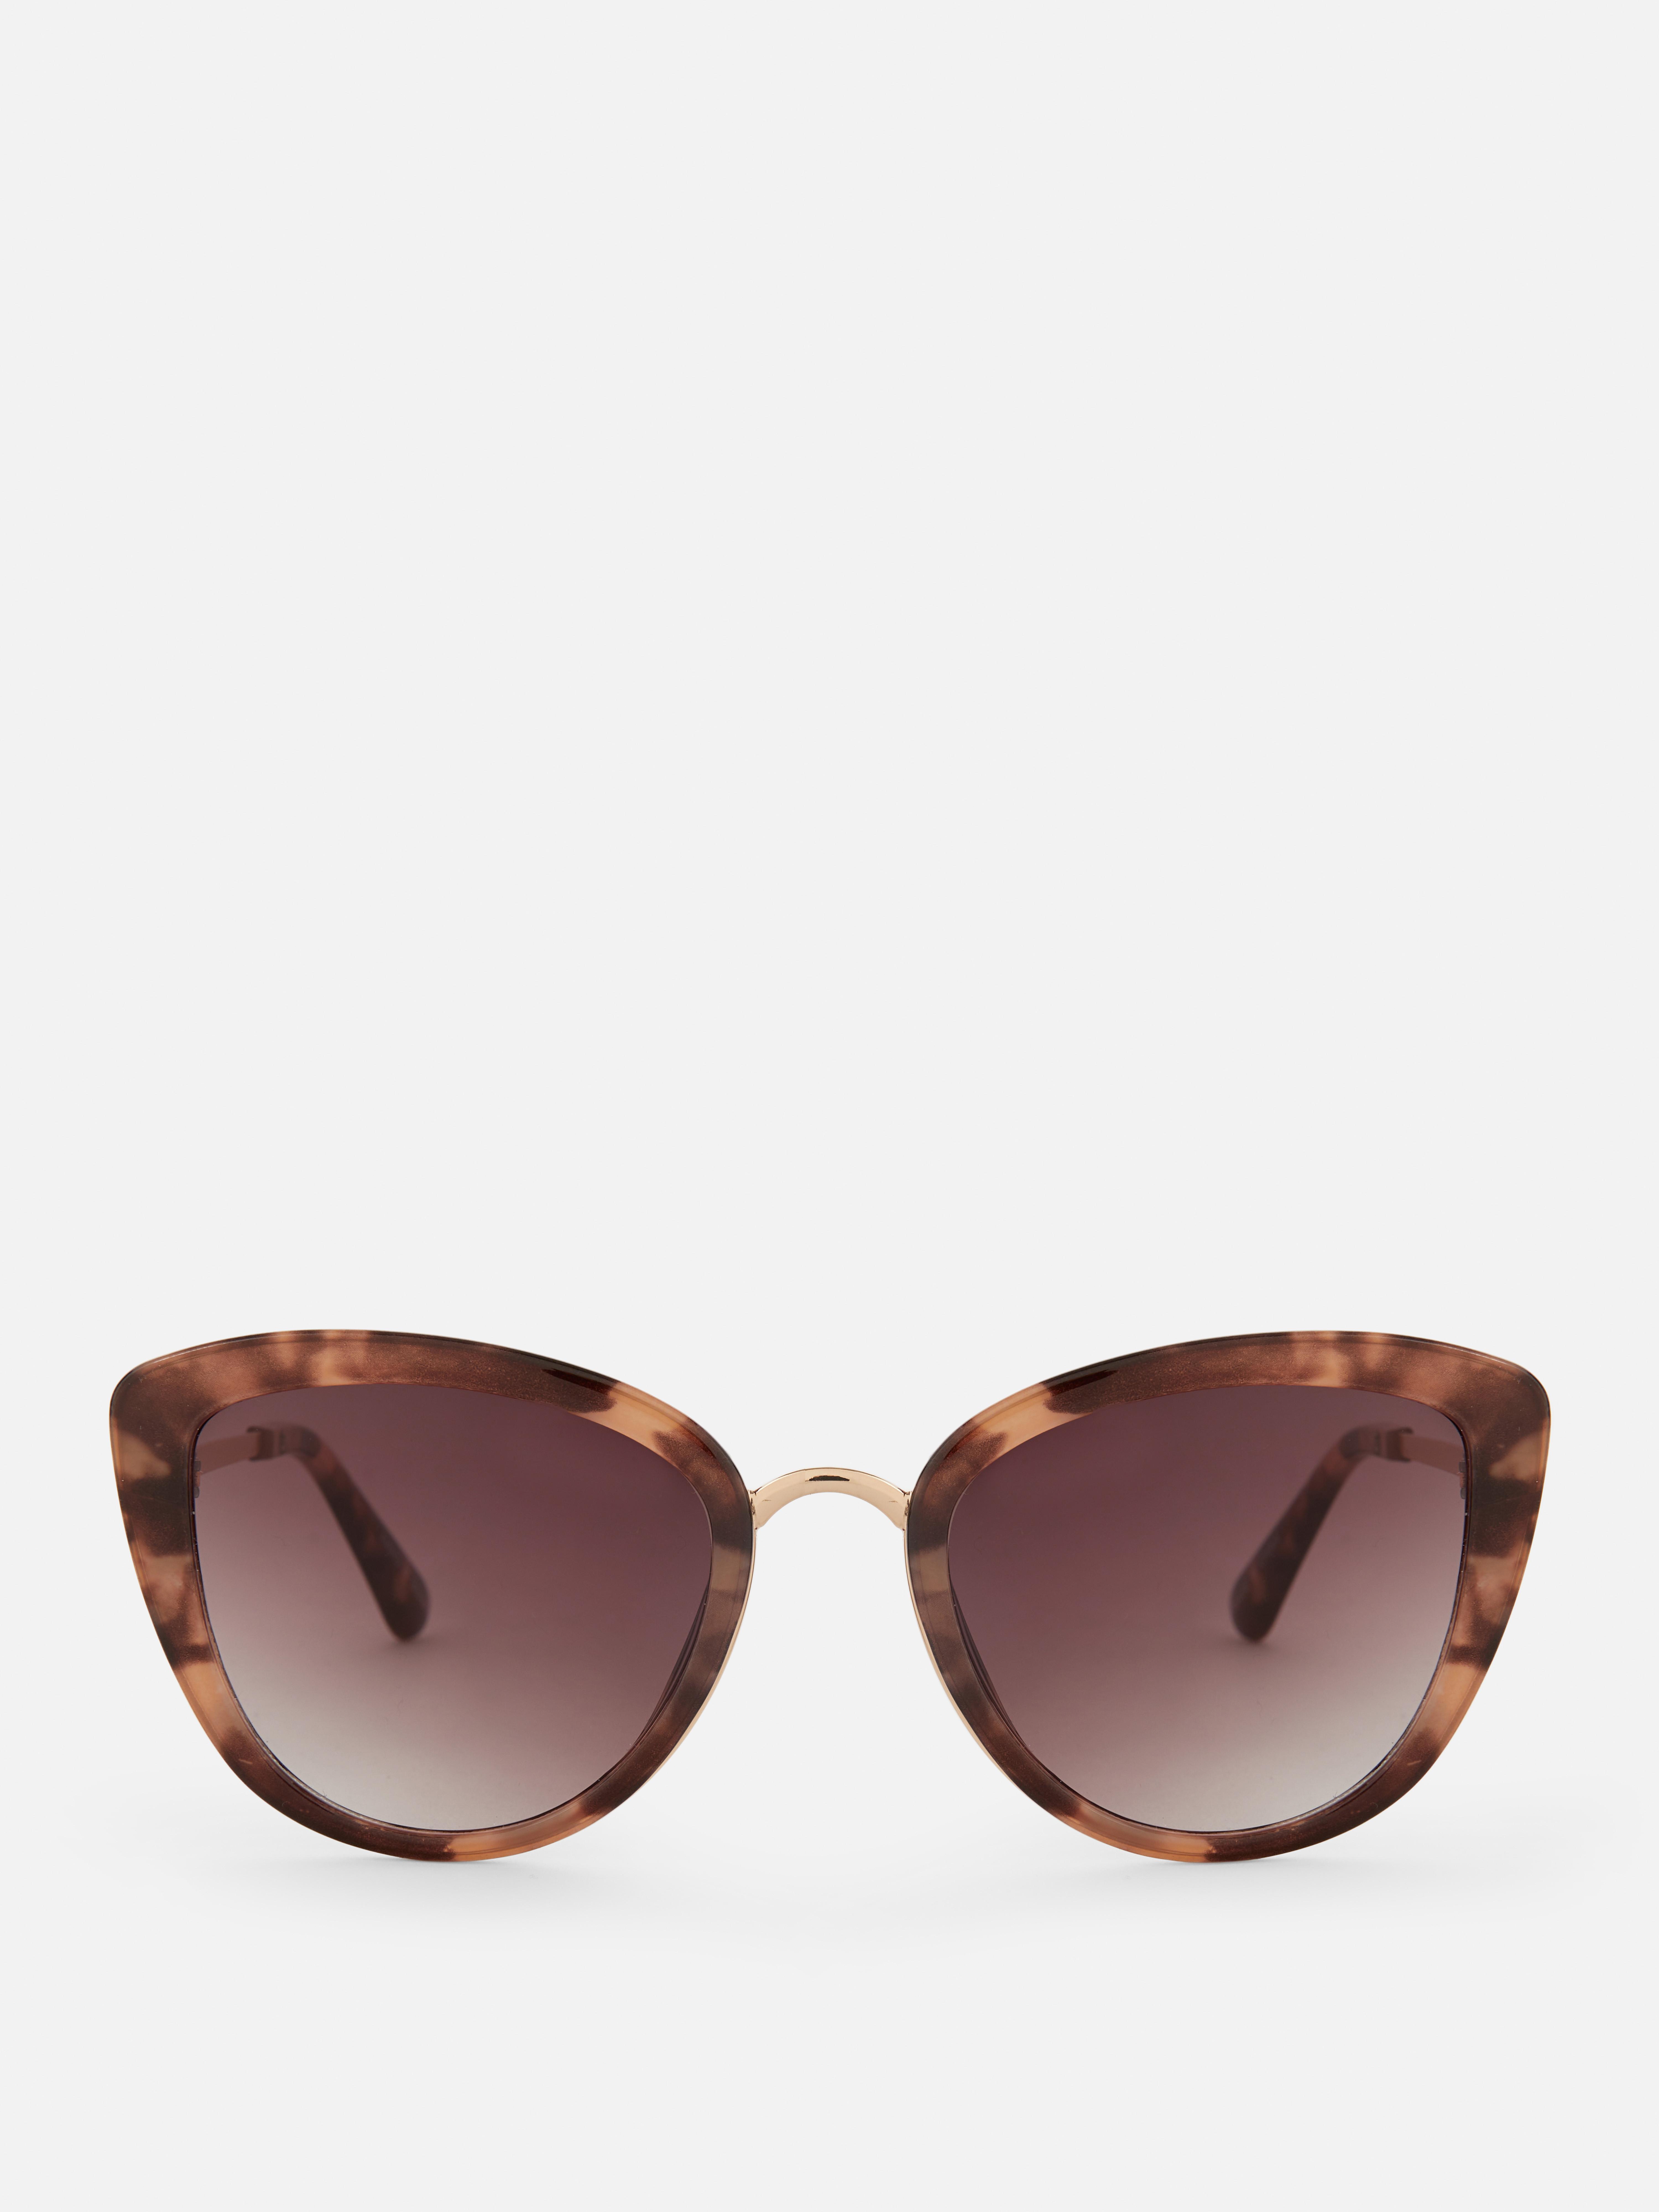 Women's Sunglasses | Cat Eye, Round, Square, Oversized Sunglasses | Primark